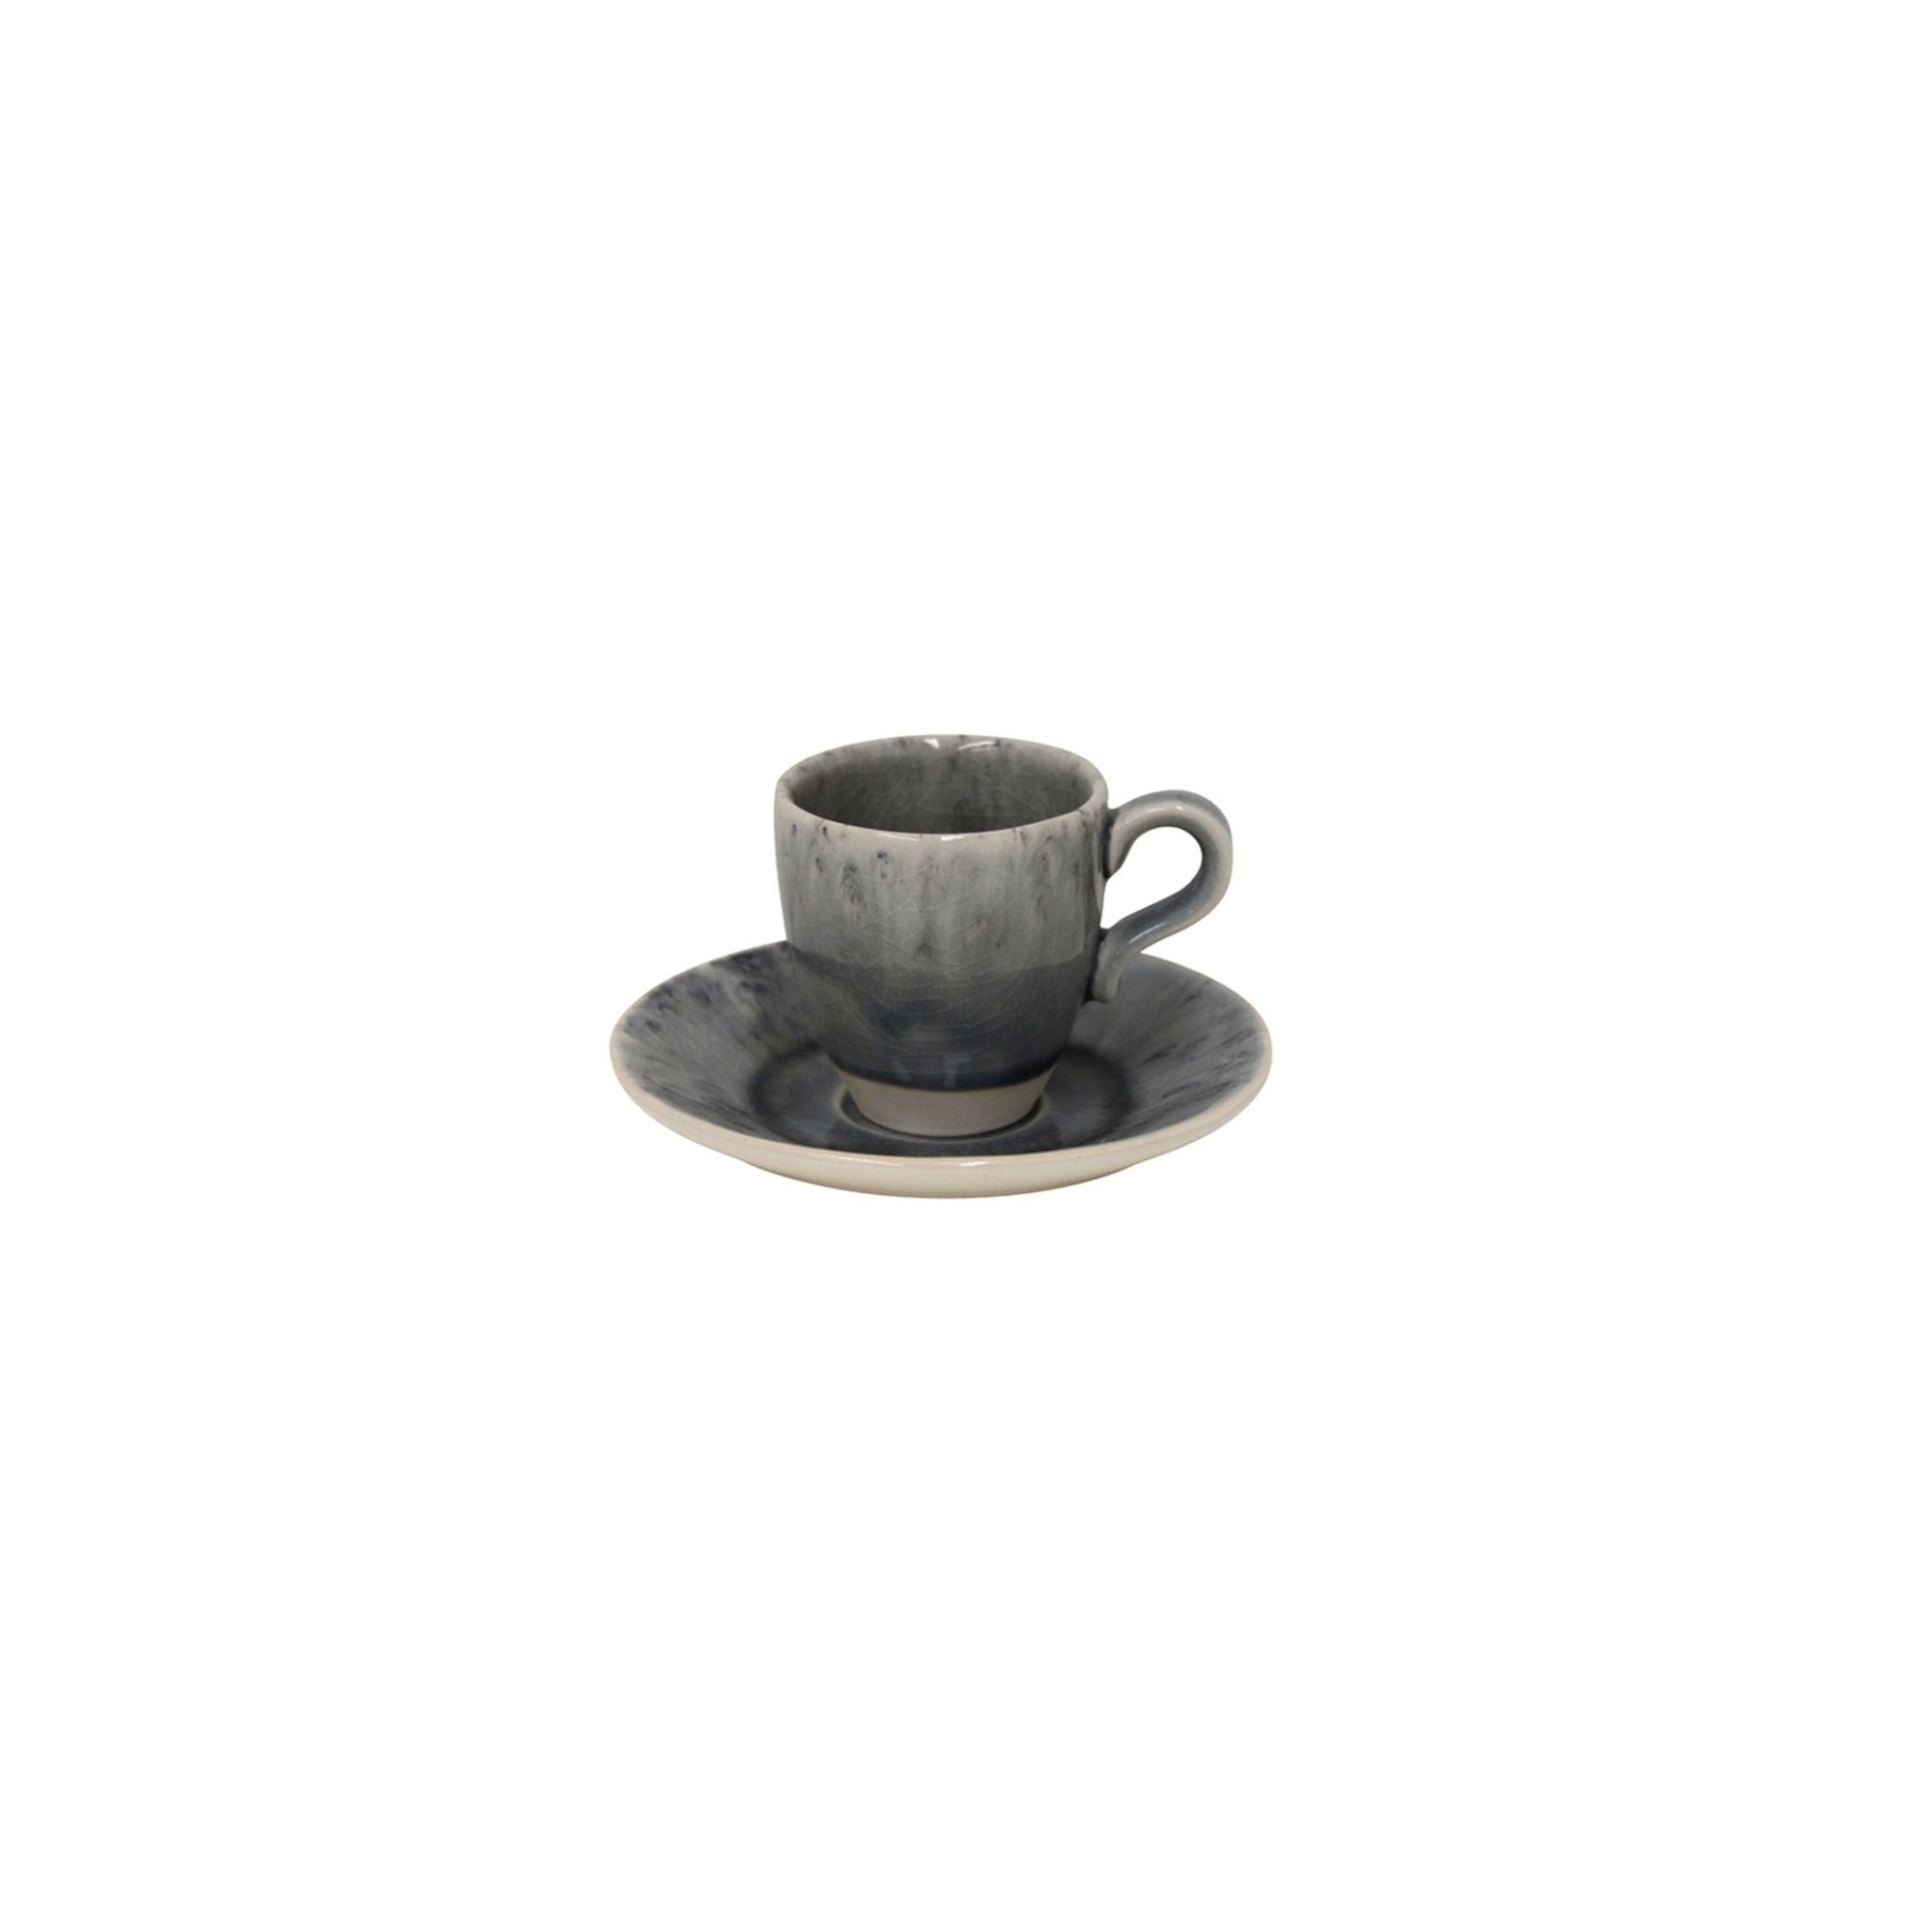 Madeira Coffee Cup and Saucer 3 oz. Grey